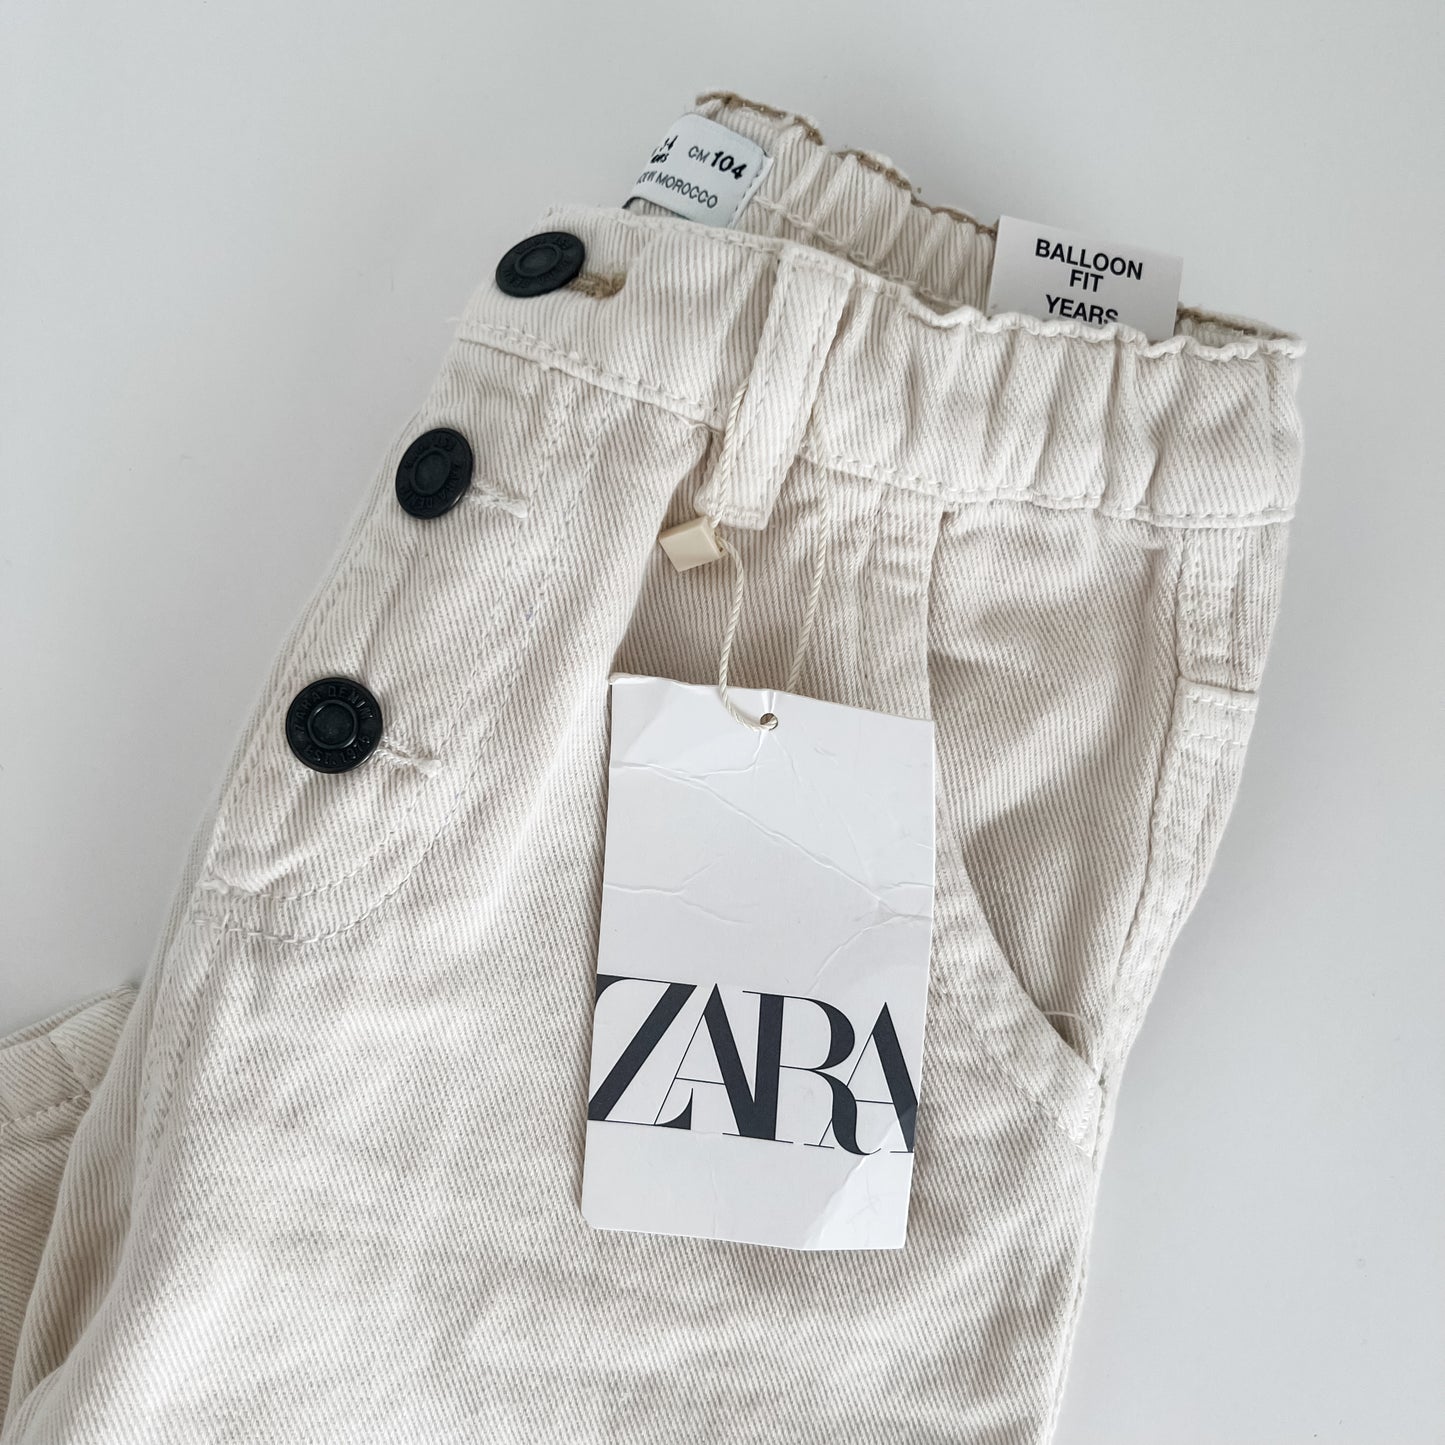 Zara Balloon Fit Pants *NWT* (3-4yr)